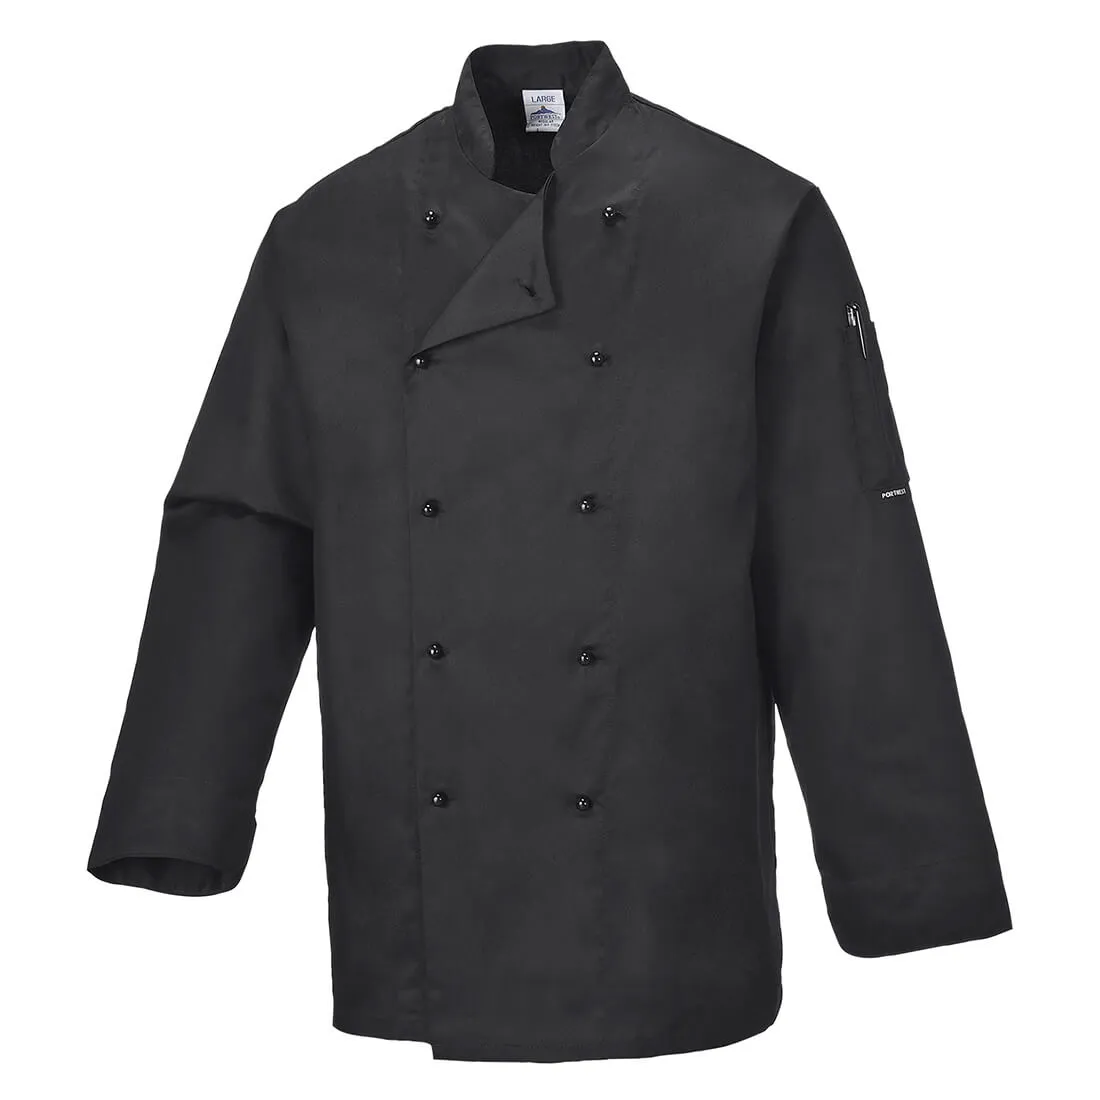 Portwest Unisex Somerset Chefs Jacket - Black, 2XL